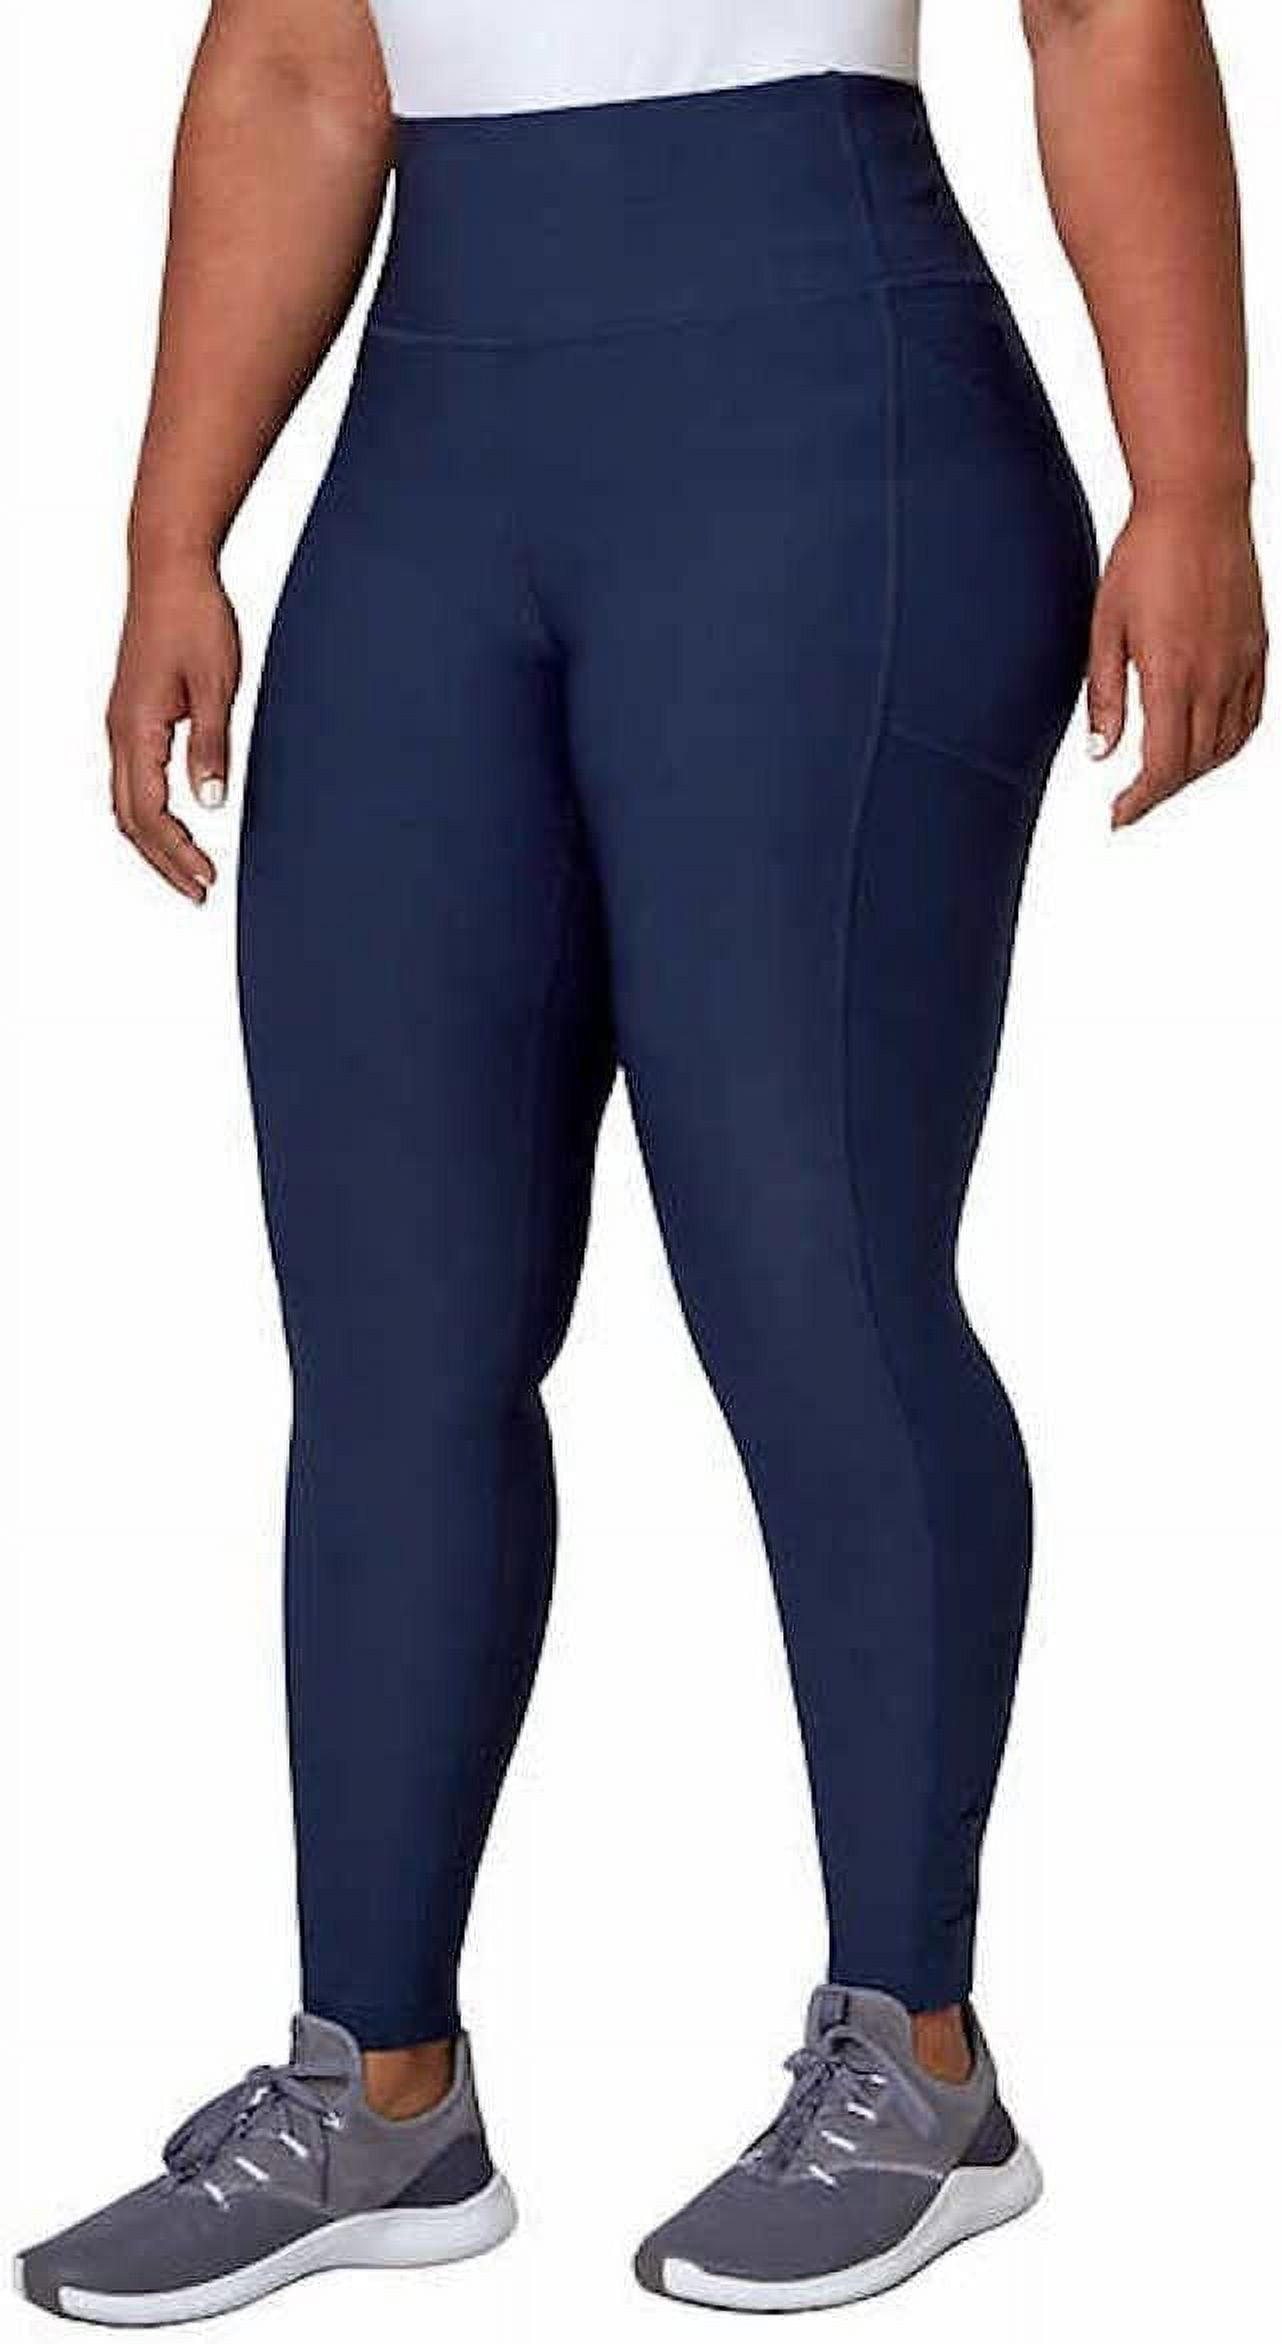 Mondetta Ladies High Waist Side Pocket Active Tight Pant Leggings, Navy, X- Large 